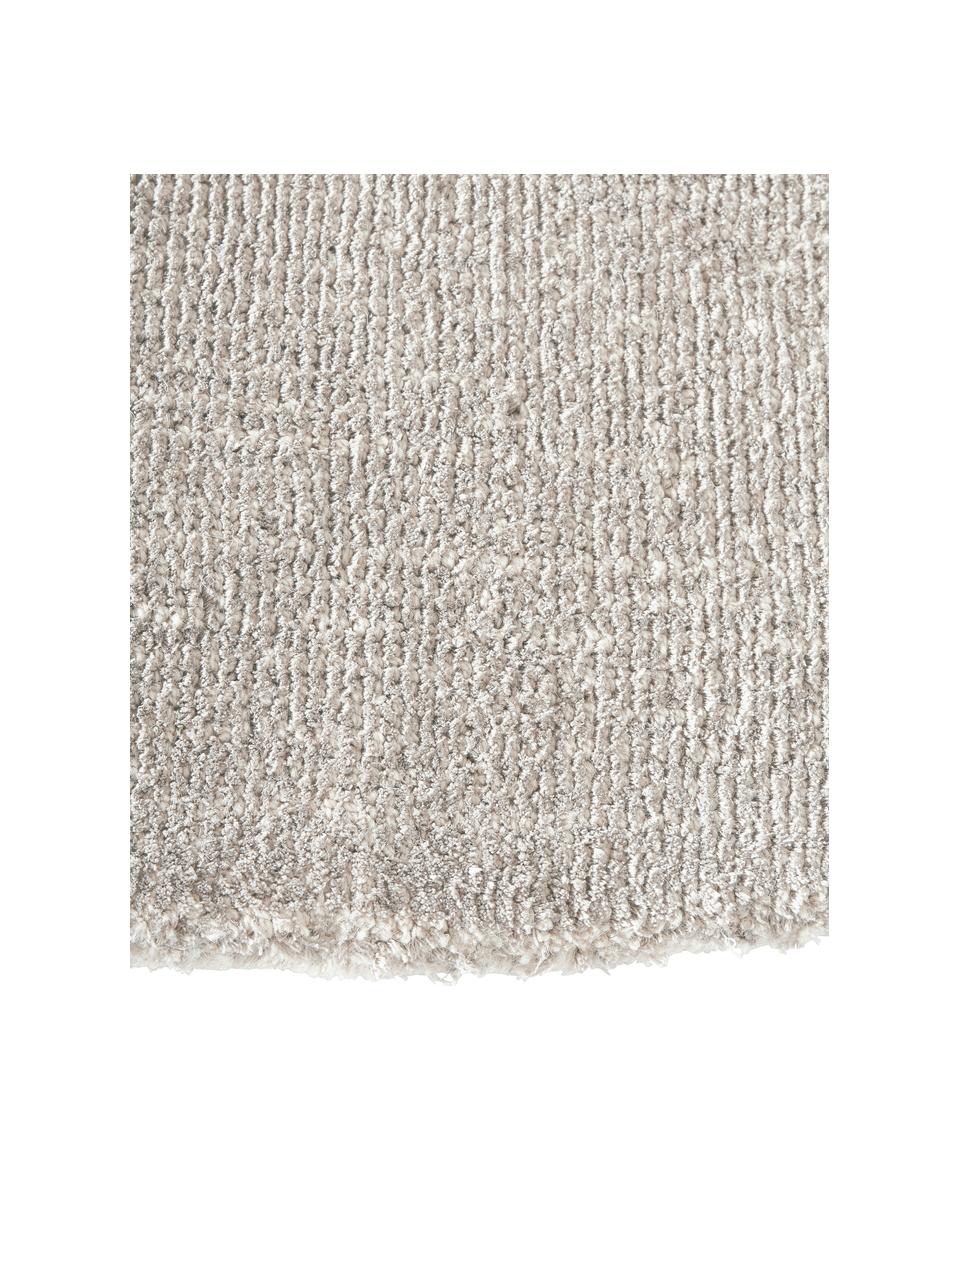 Alfombra artesanal Ainsley, 60% poliéster con certificado GRS
40% lana, Gris claro, Ø 150 cm (Tamaño M)